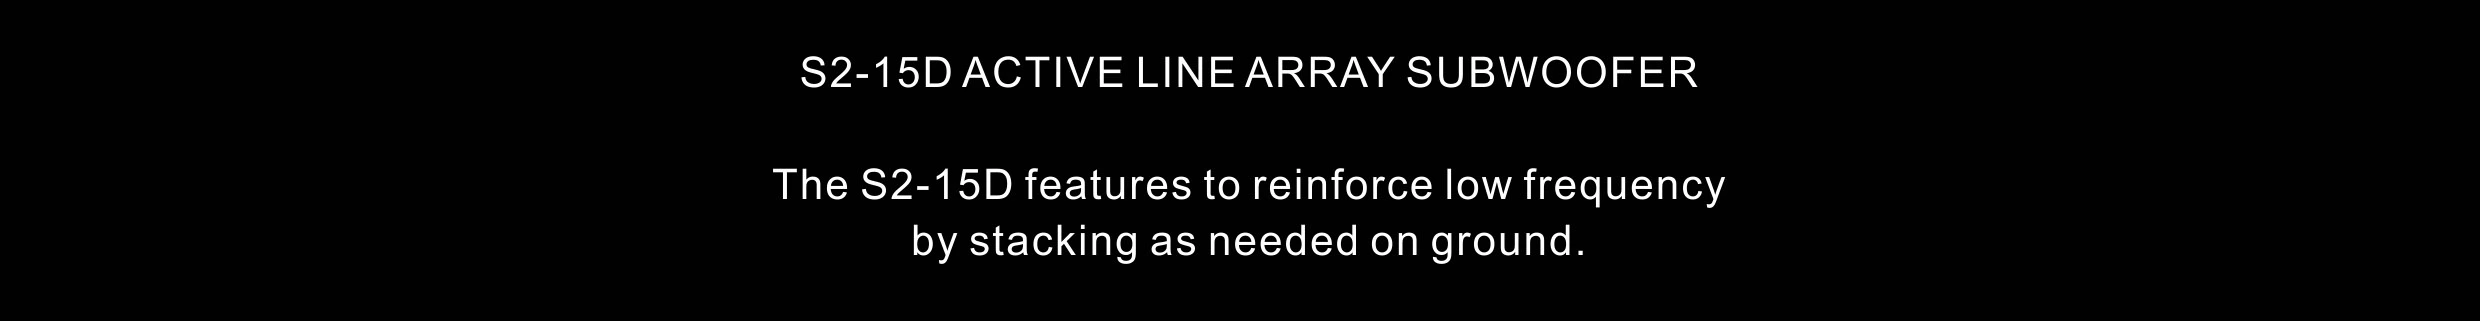 line array professional subwoofer,line array subwoofer speaker,subwoofer line array,line array subwoofer,Line Array Speakers